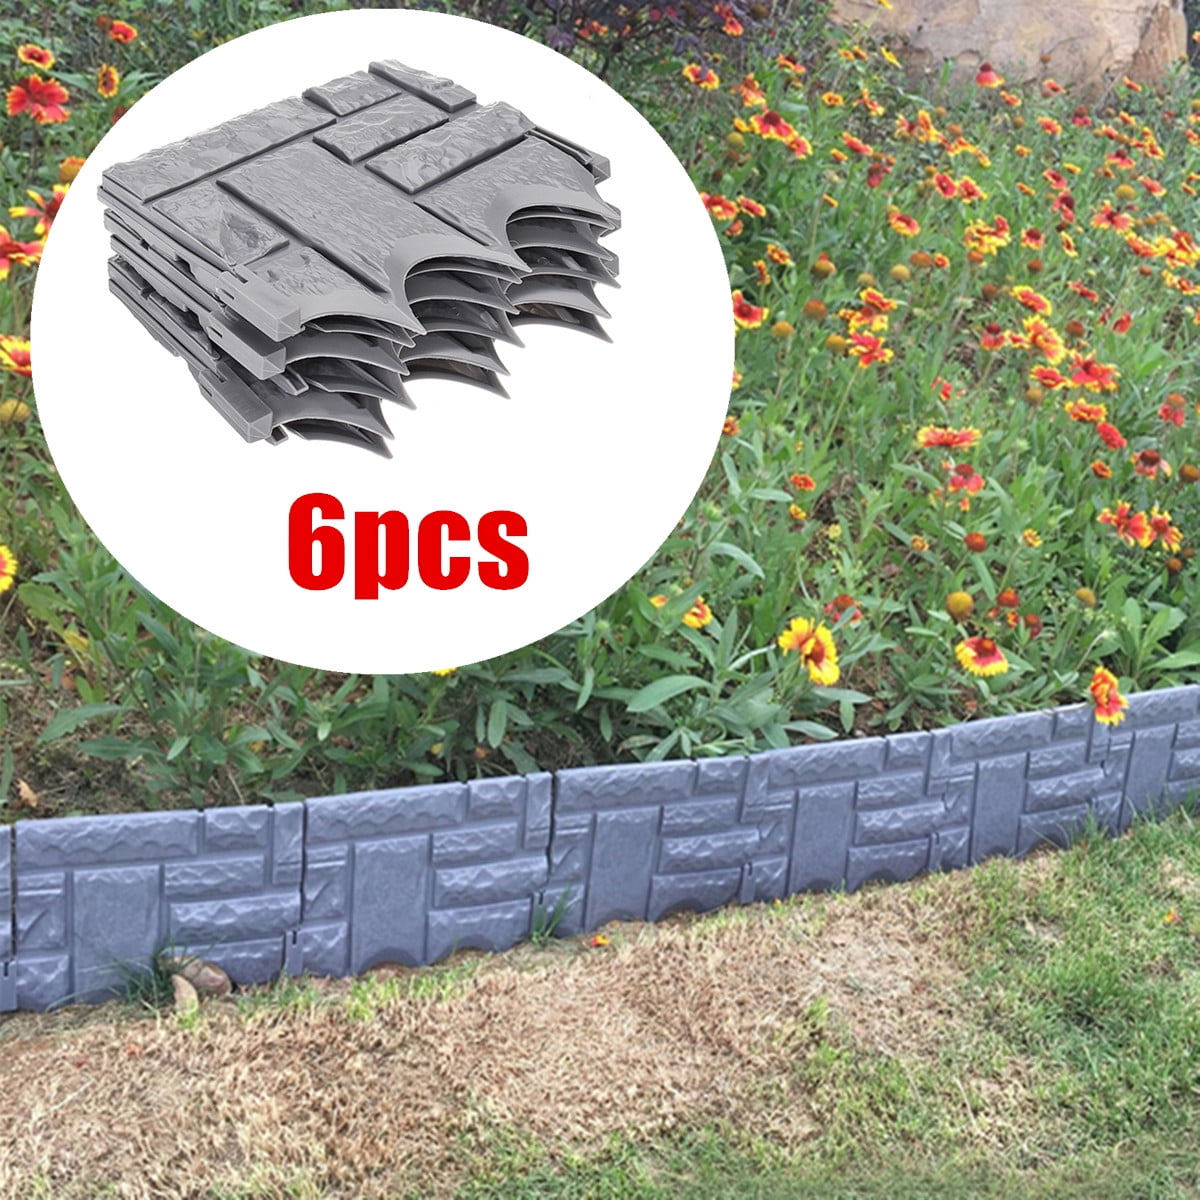 12X Garden Plastic Fence Picket Protective Guard Indoor Outdoor Edging Decor USA 